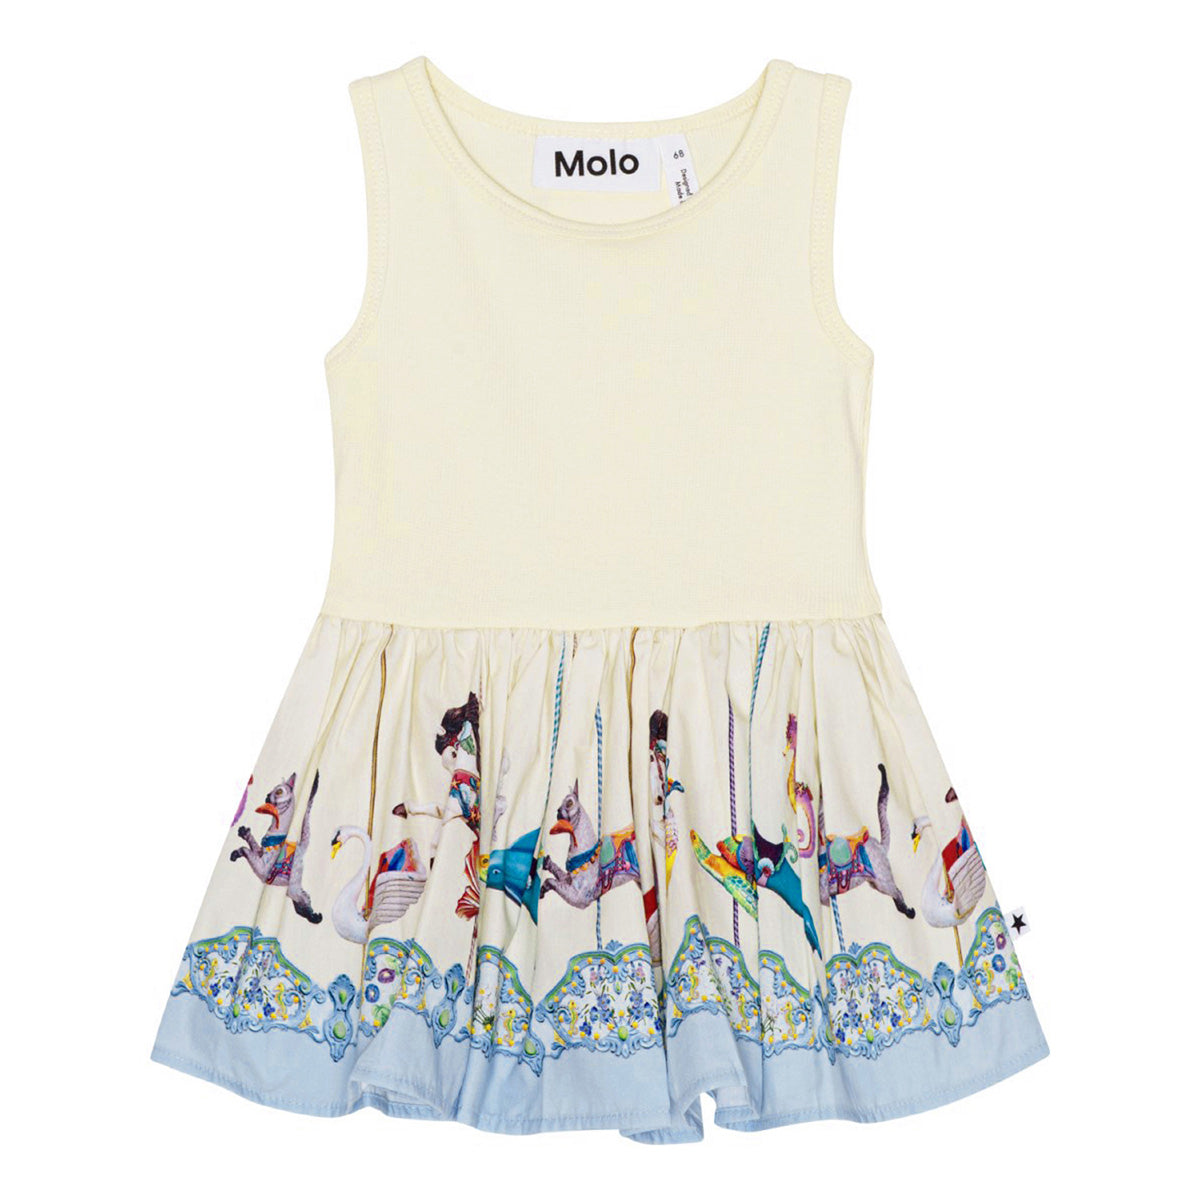 The Cordelia Dress from Molo. Cream coloured, organic, sleeveless dress for small children